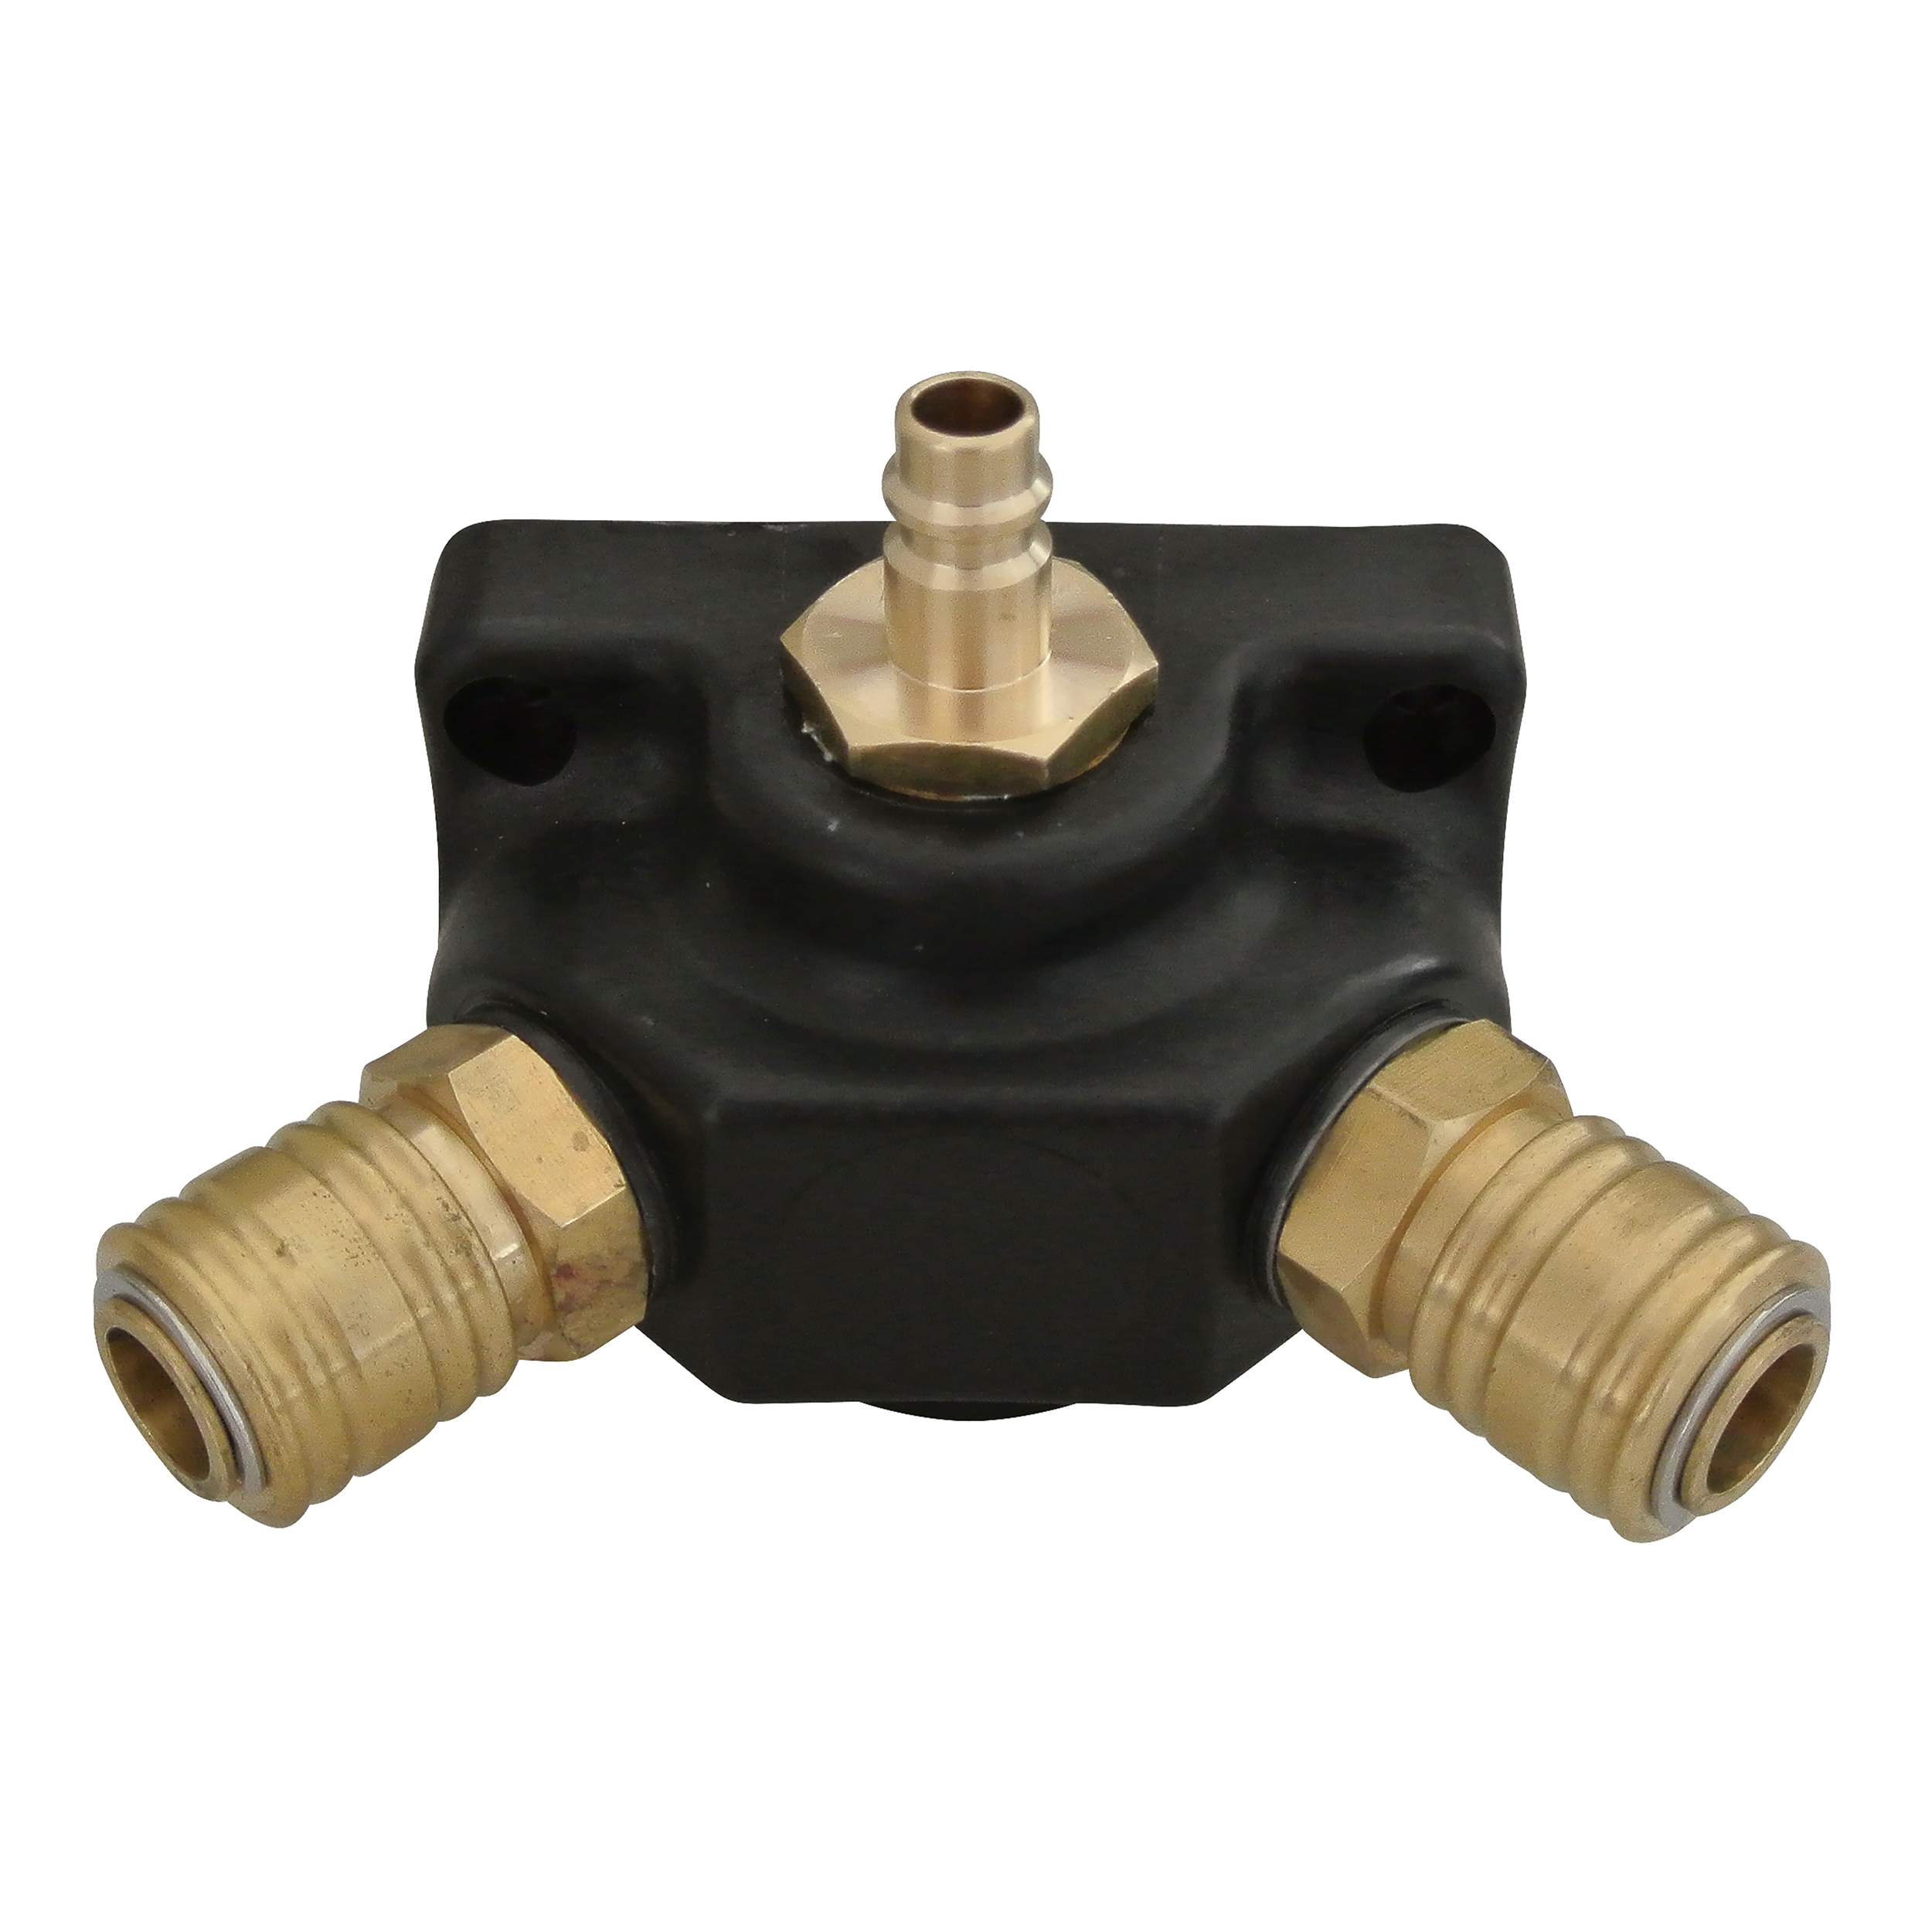 Distributor block (brass), w. 2/3 cpl. DN 7.2, coupling plug